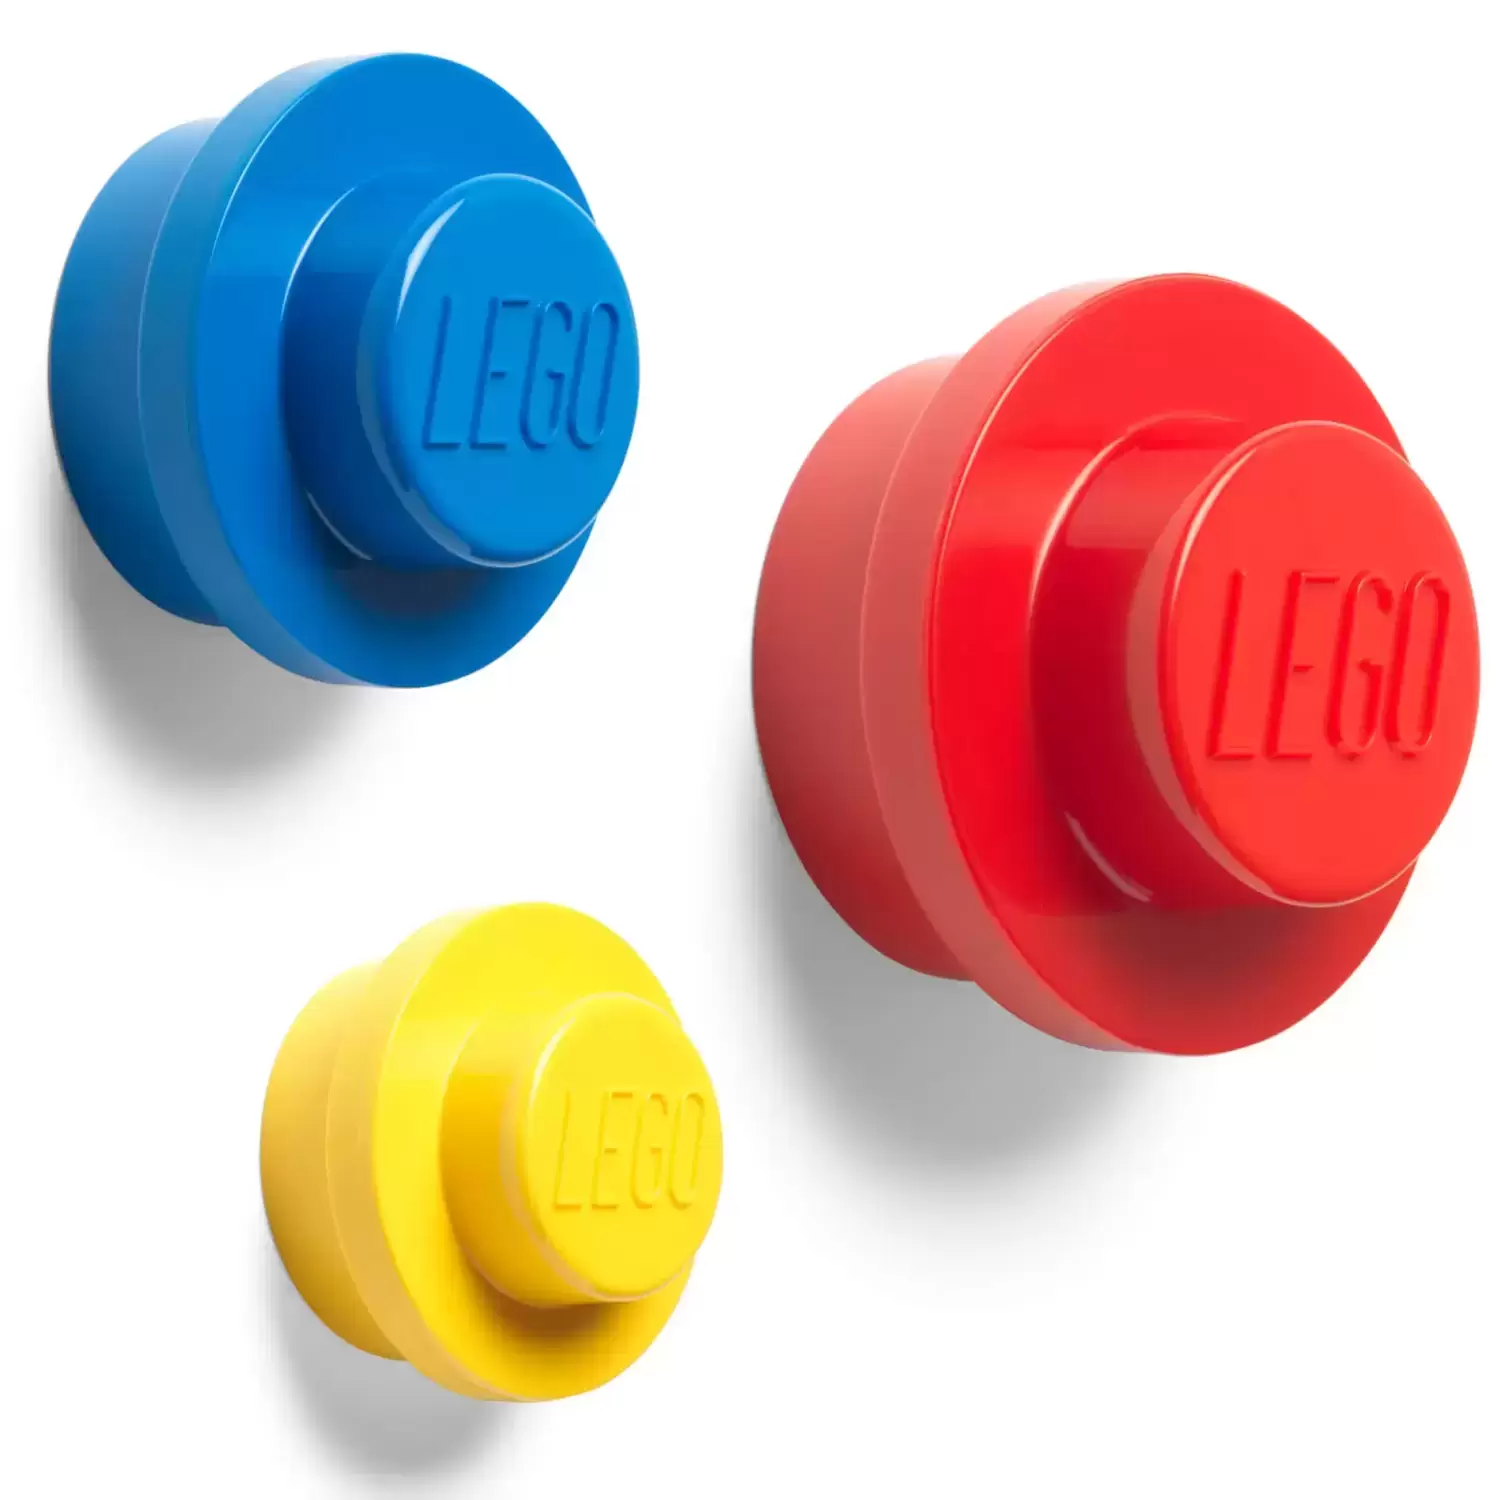 Rangements LEGO - Set d\'accroche murale LEGO - Rouge/Bleu/Jaune